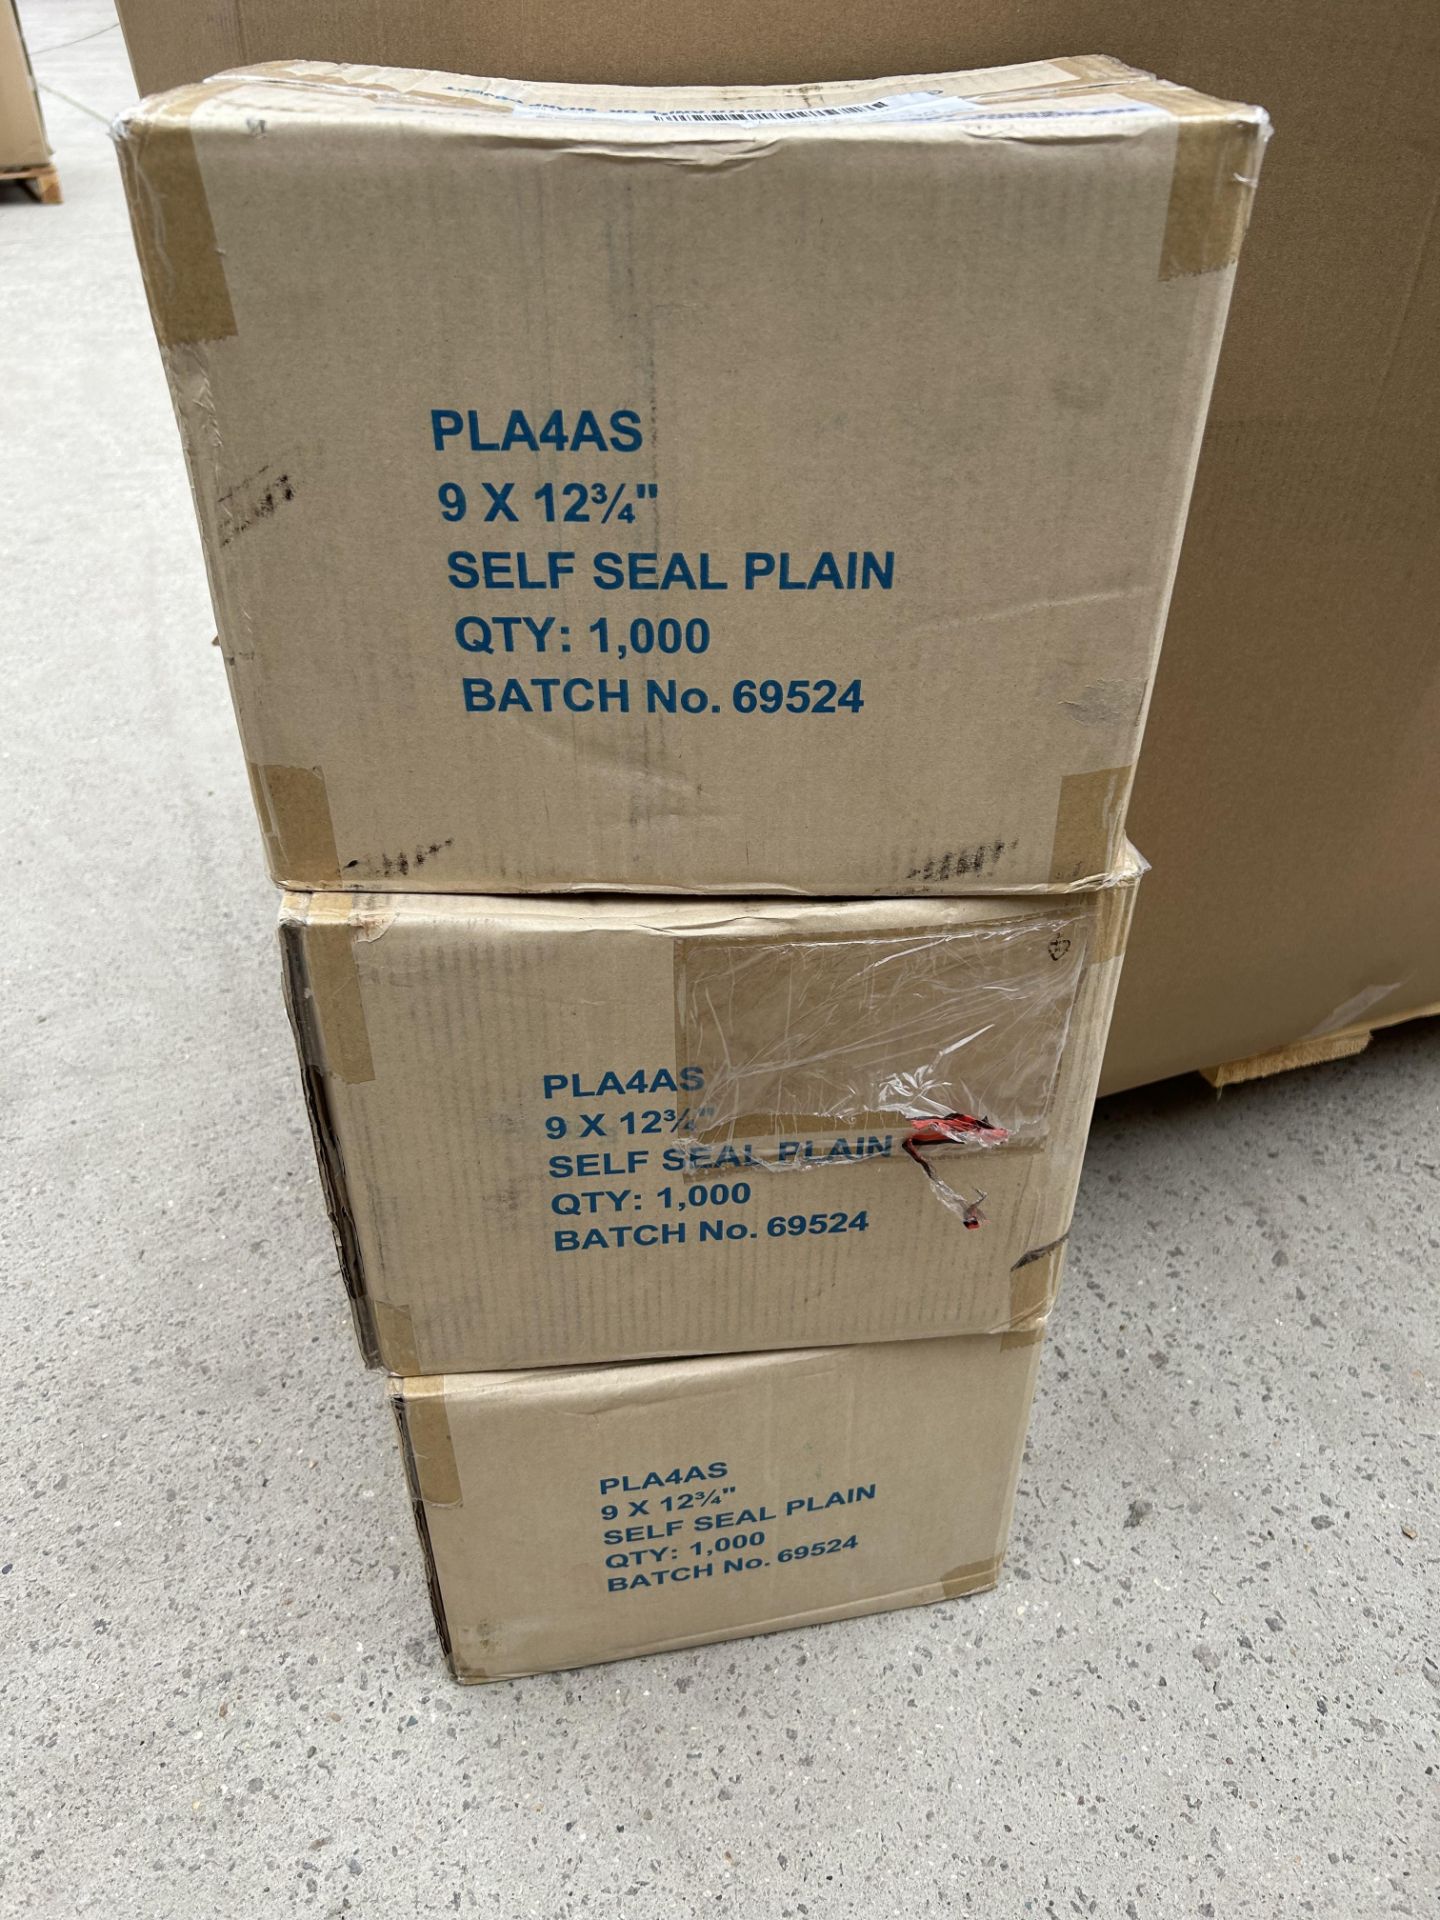 3 BOXES OF PLA4AS SELF SEAL PLAIN CLEAR BAGS - 9x12.75" (1000 UNITS PER BOX)